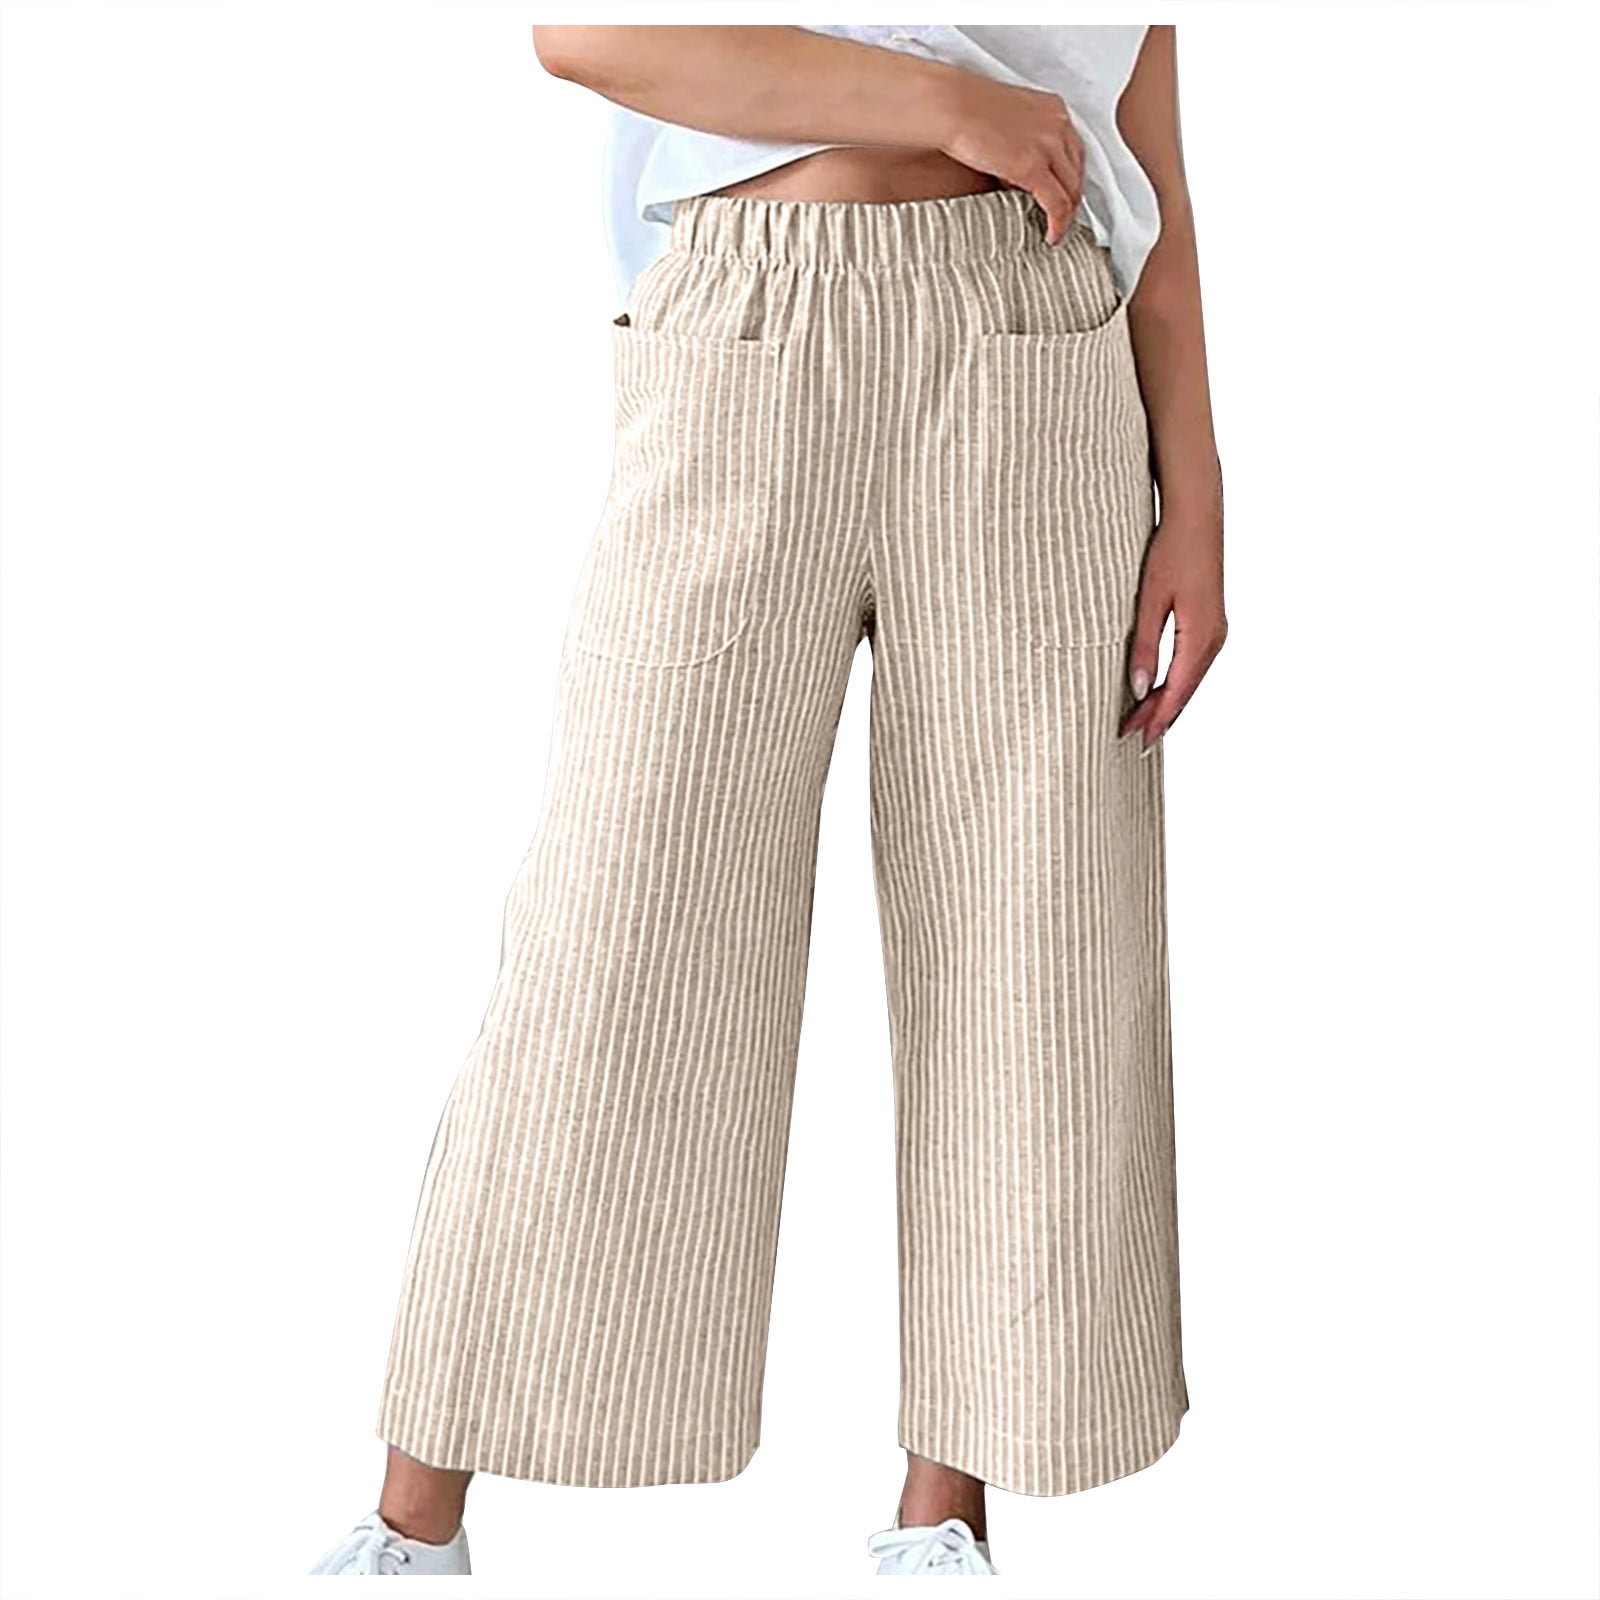 QUYUON Pants for Women Discount Summer Fashion Stripe Printed Pocket Casual  Loose Casual Straight Pants Fishing Pants Long Pant Leg Length Casual Style  P1094 Khaki XL 